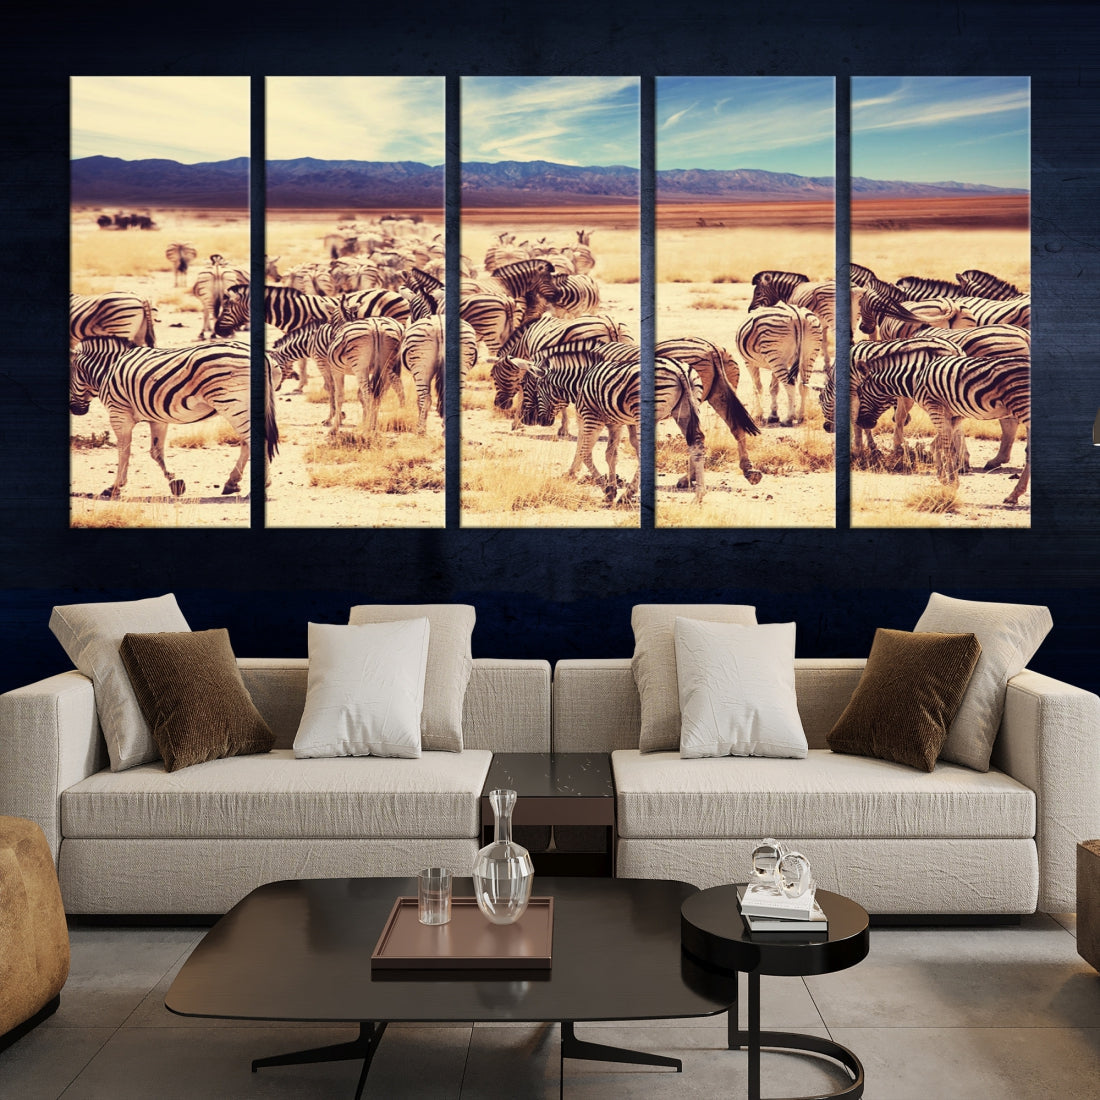 Zebras in the Savannah Africa Wild Animals Wildlife Photo Canvas Wall Art Giclee Print